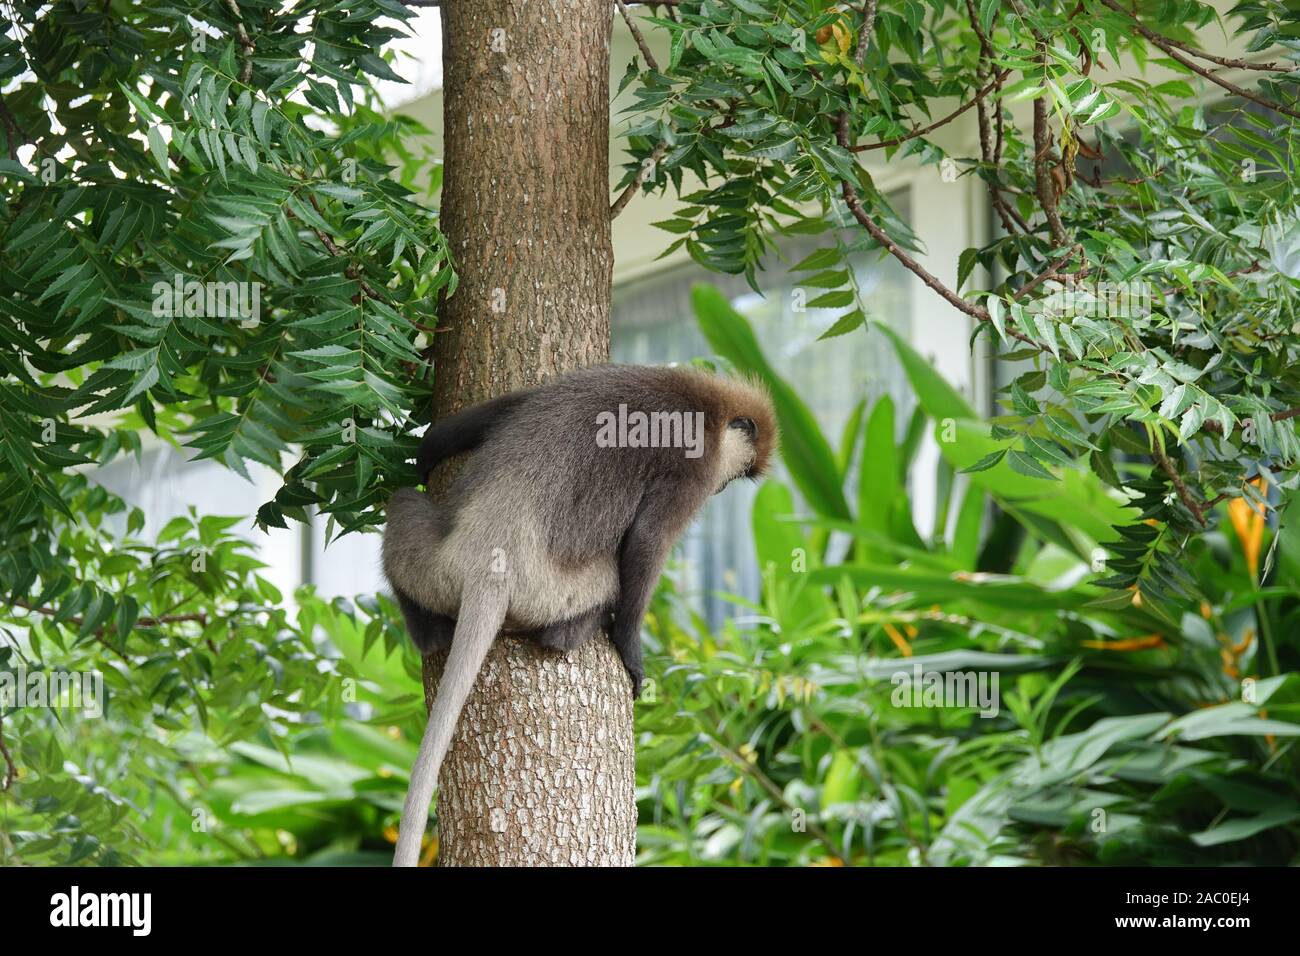 A Monkey on the tree. Sri Lanka Stock Photo